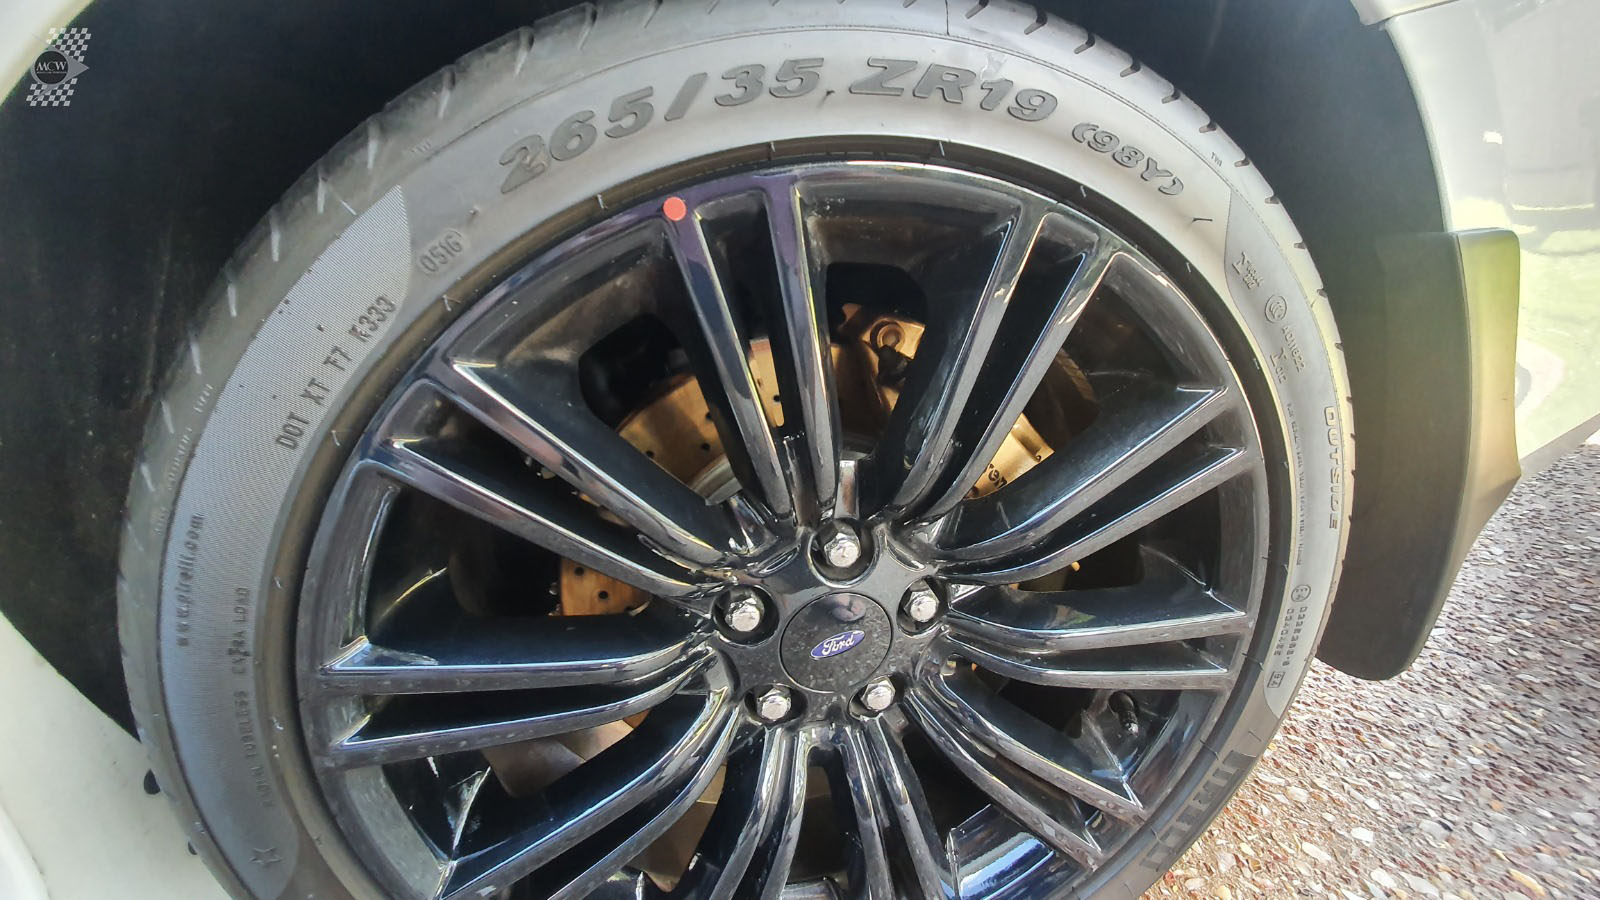 2016 Ford Falcon FGX XR8 Sprint Wheel - Muscle Car Warehouse